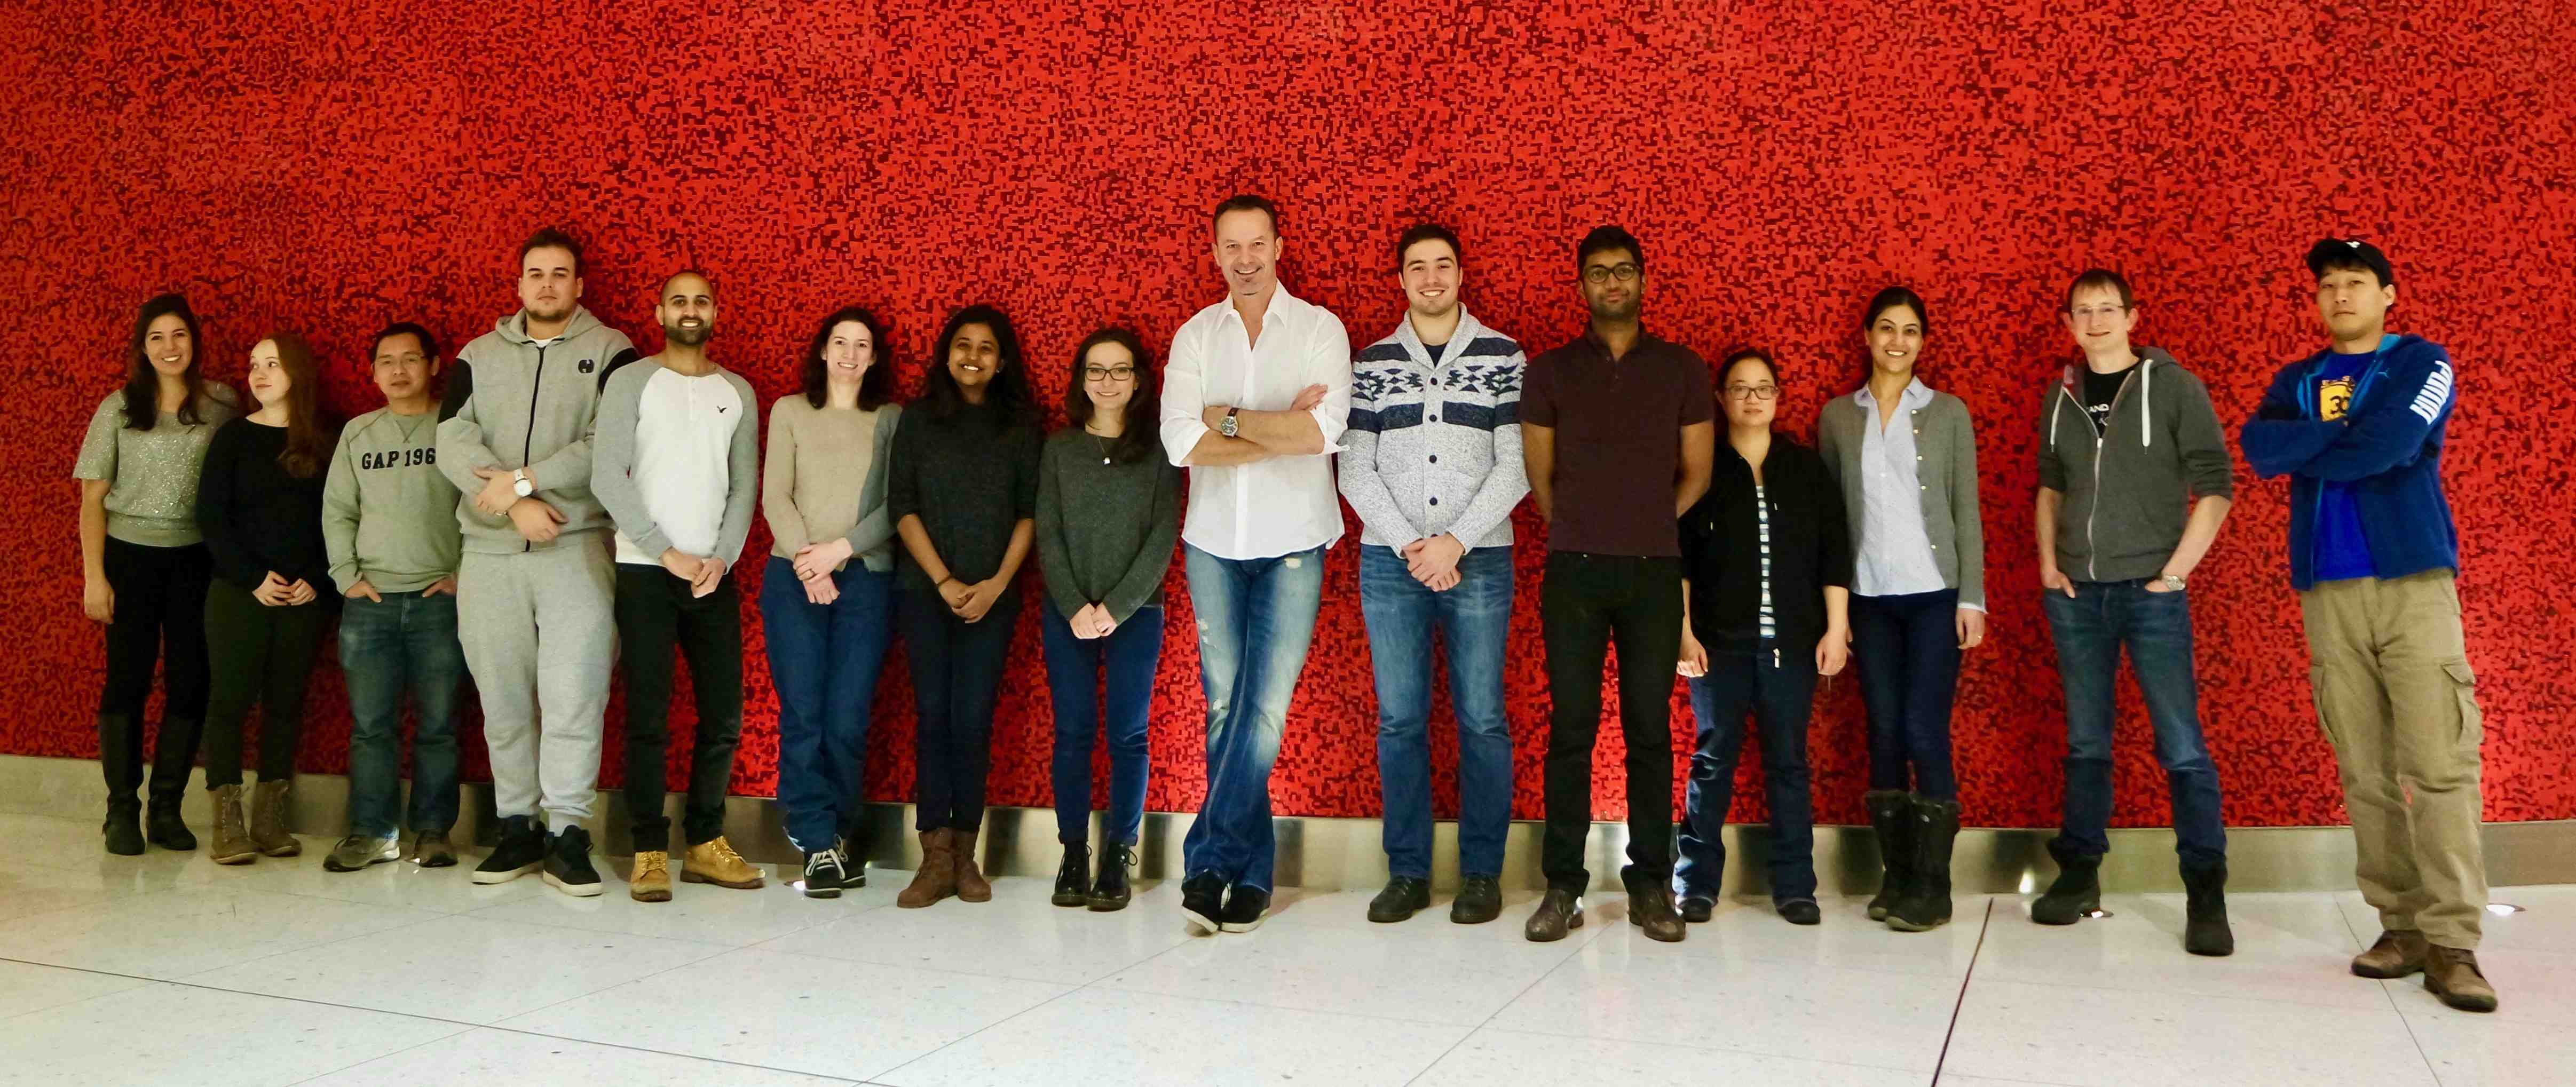 Stagljar Lab group photo, December 2016